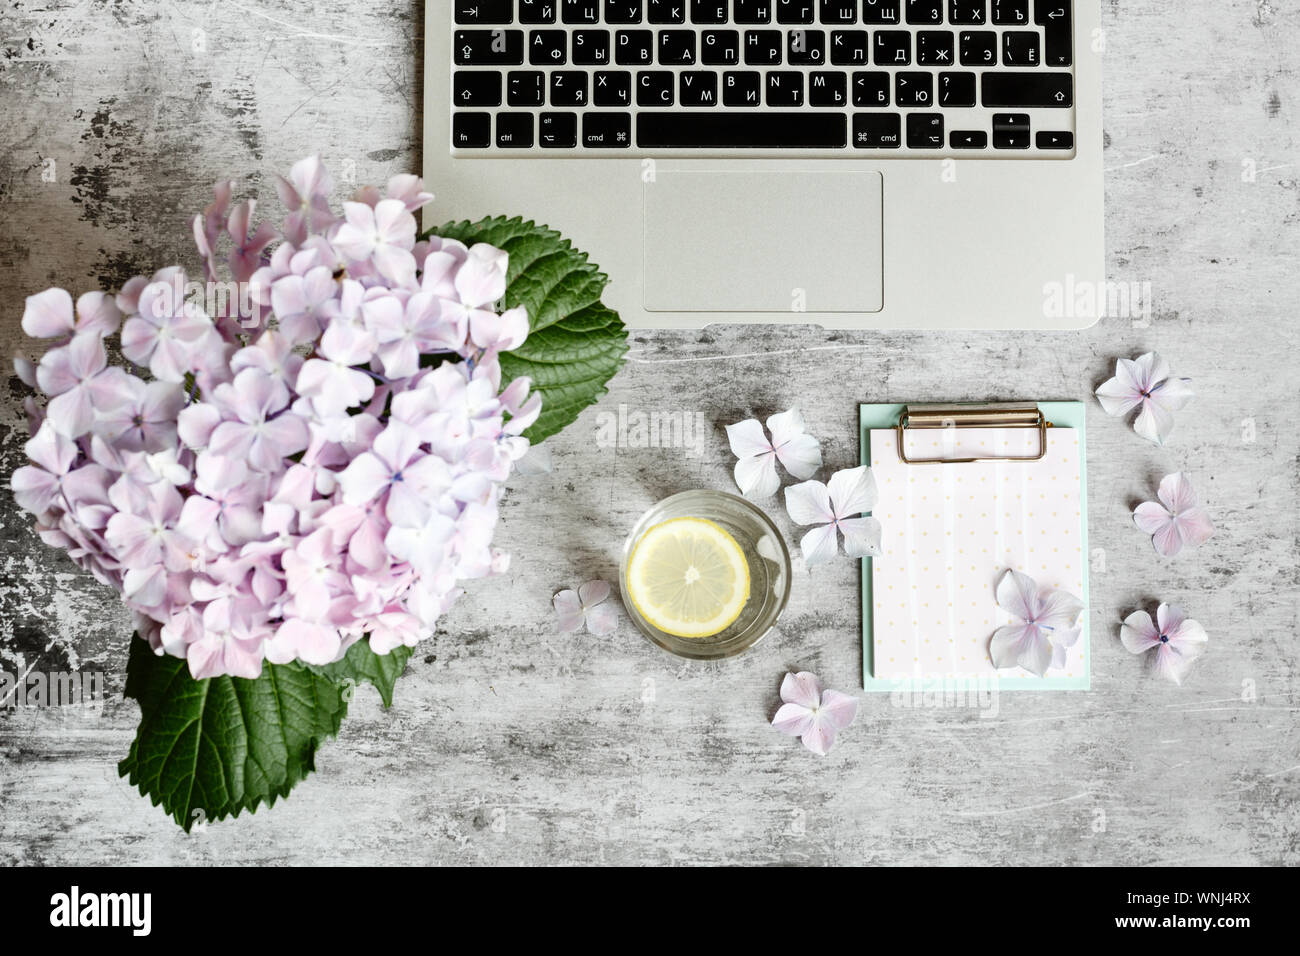 Home Office Desk Workspace With Laptop Hydrangea Flowers Bouquet